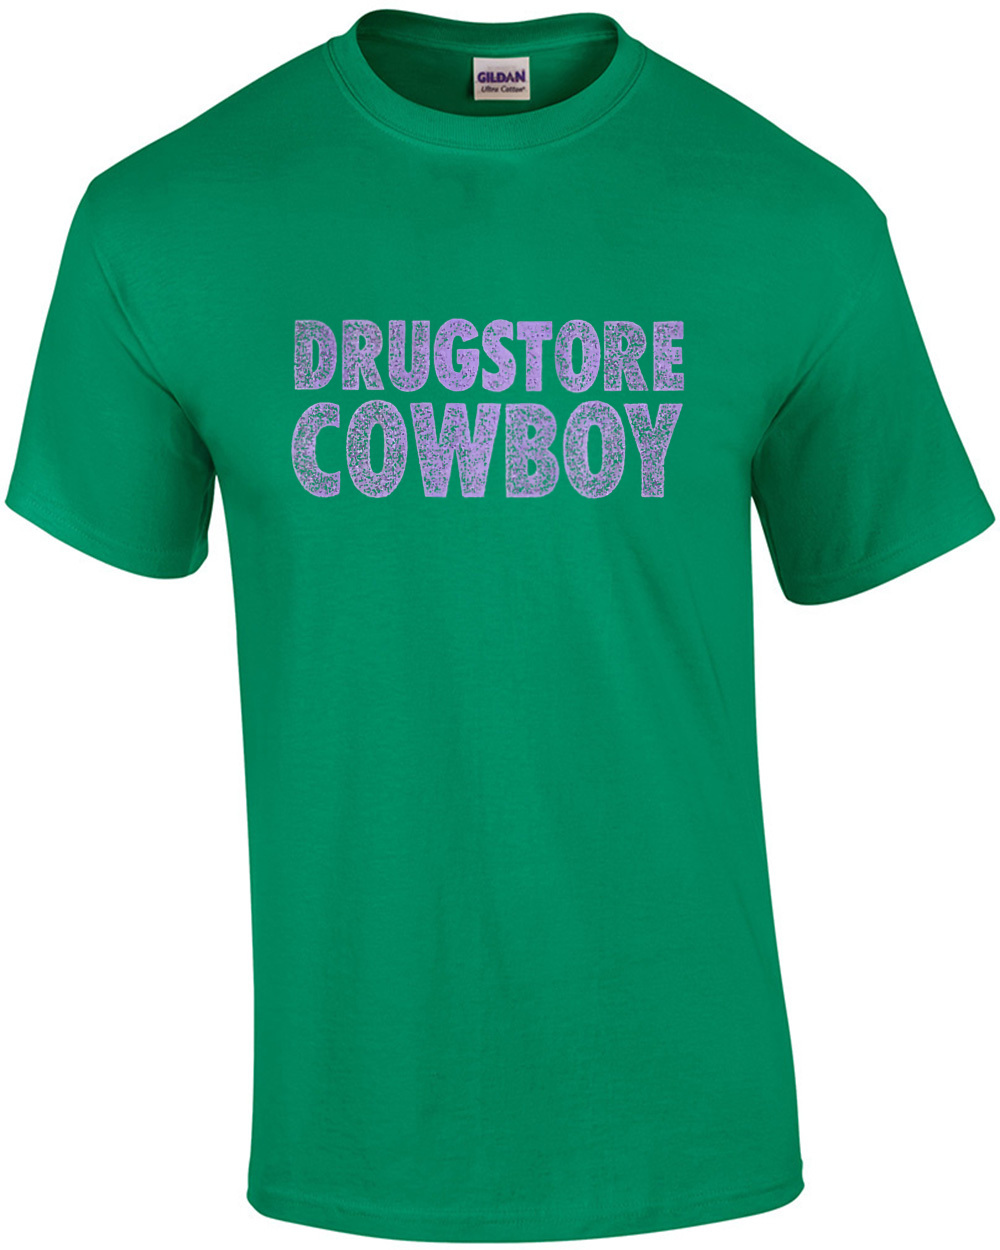 Drugstore Cowboy - 80's T-Shirt | eBay